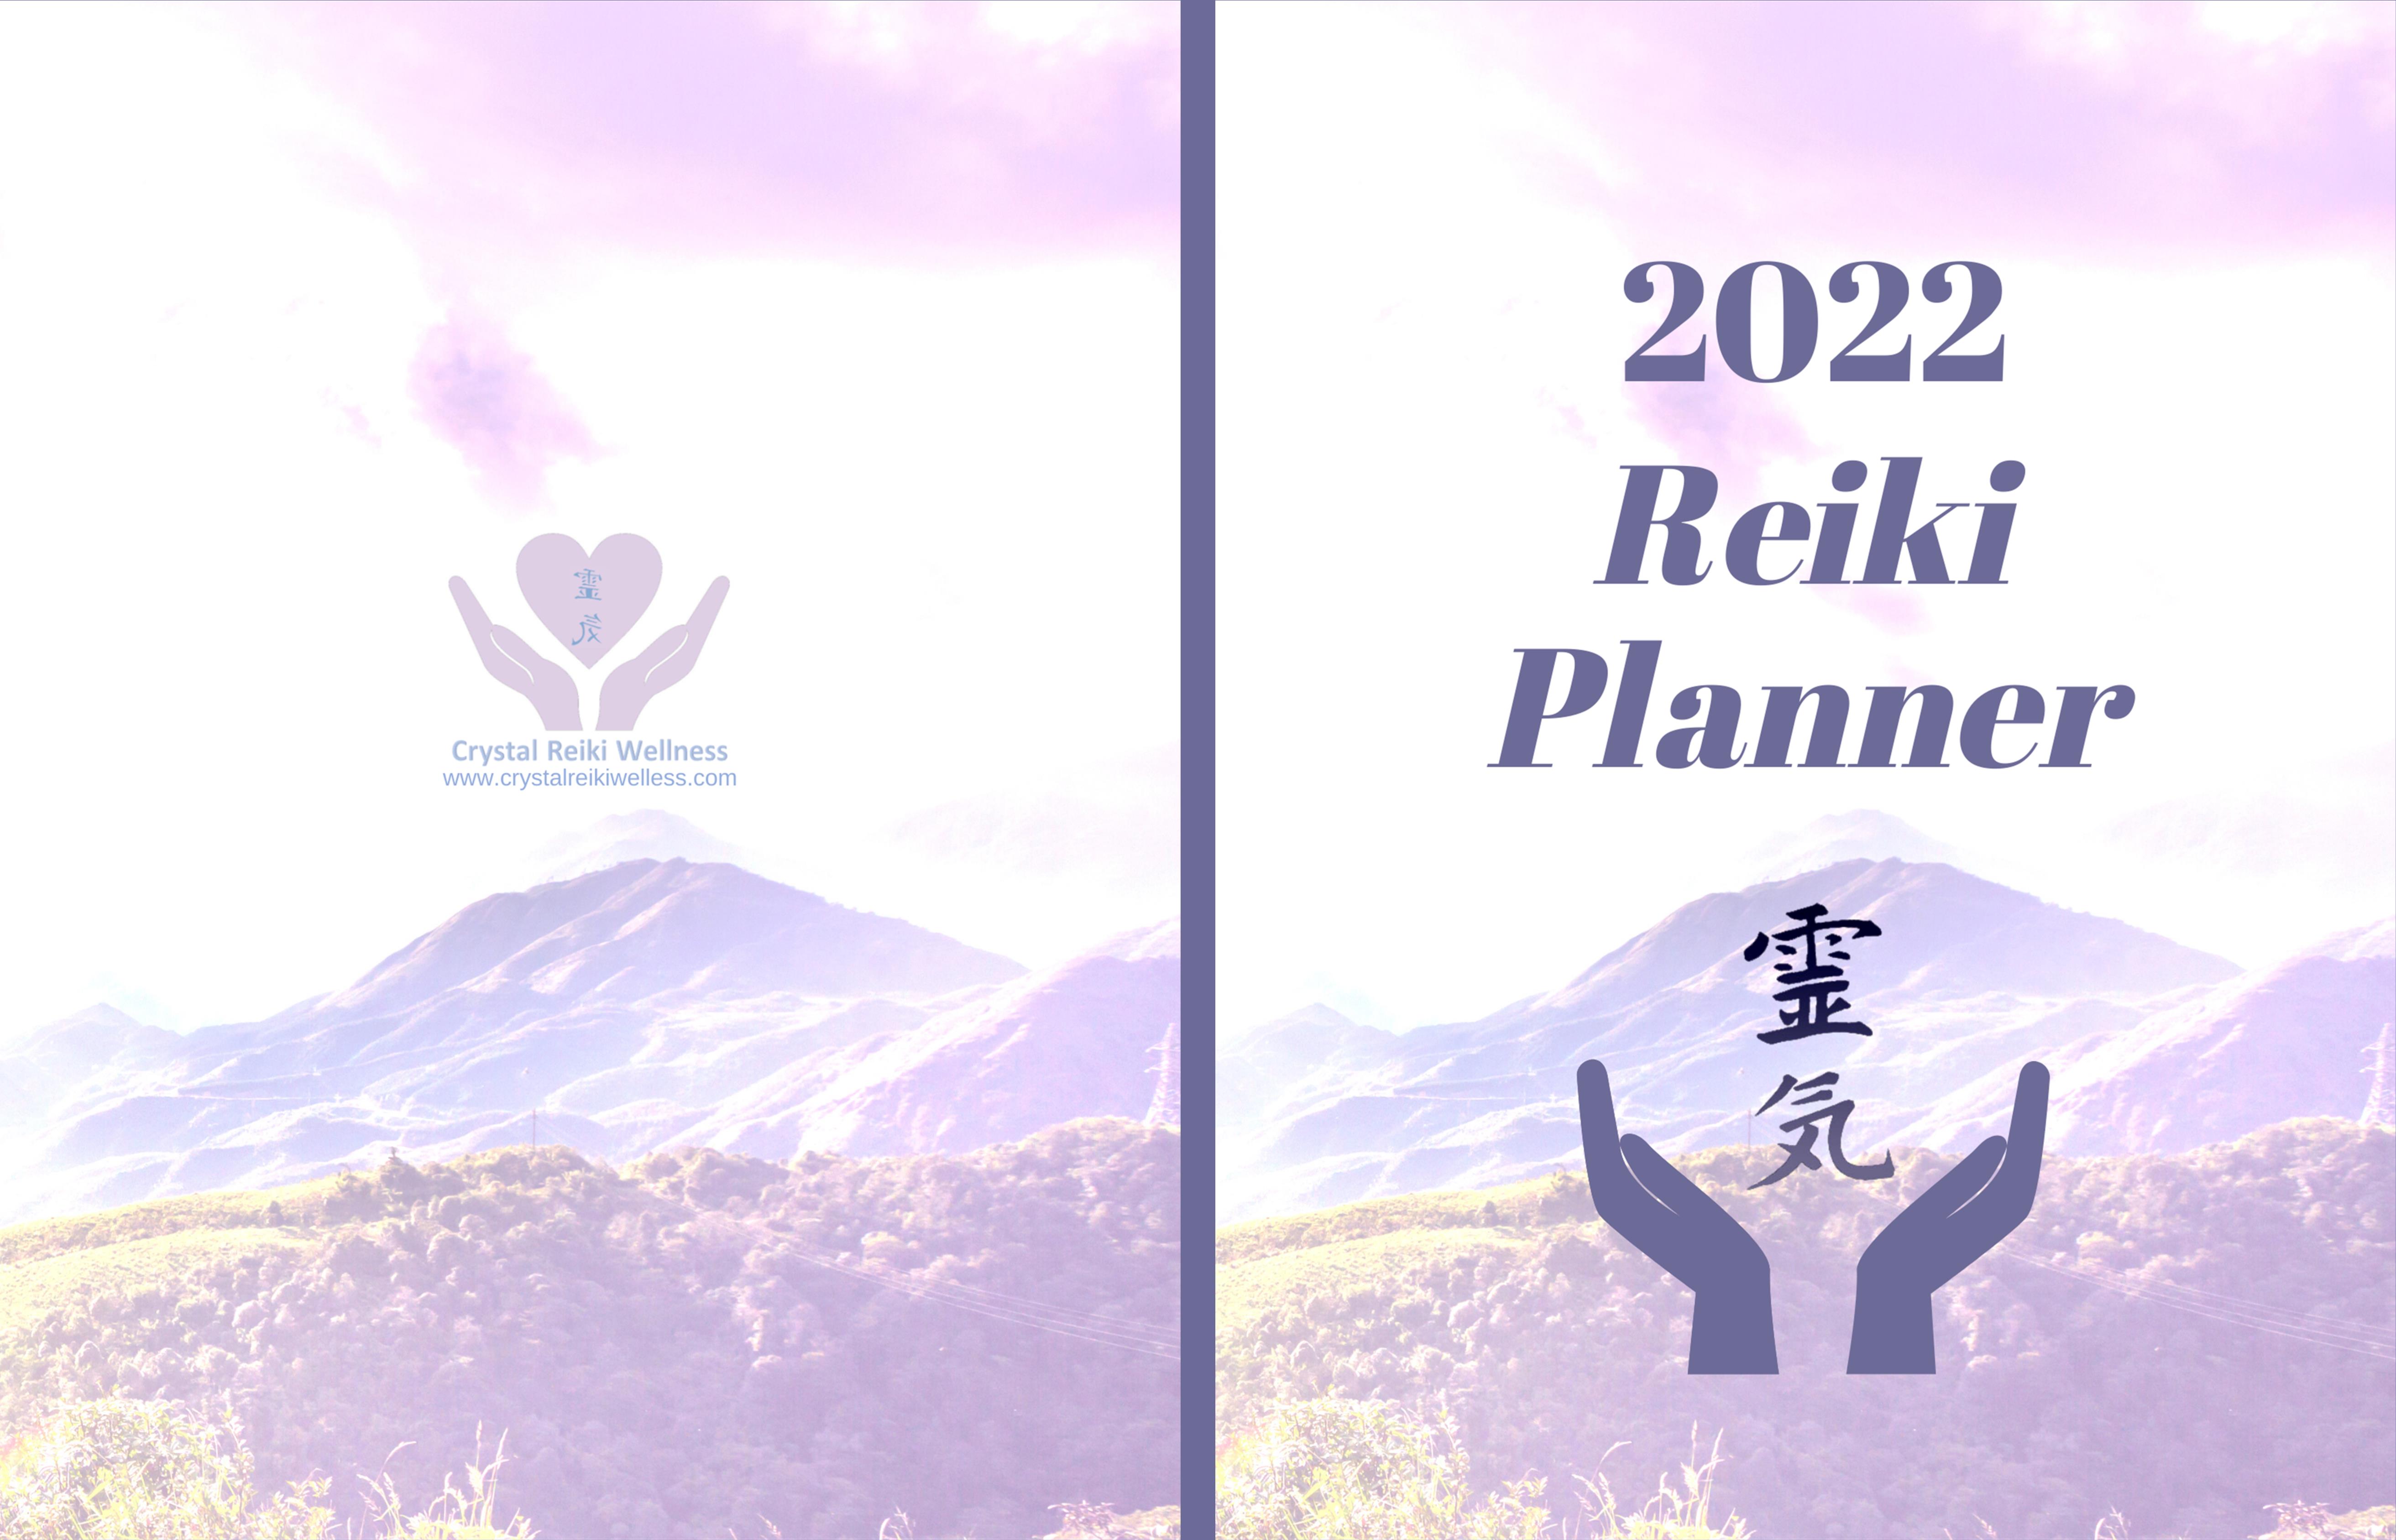 2022 Reiki Planner cover image